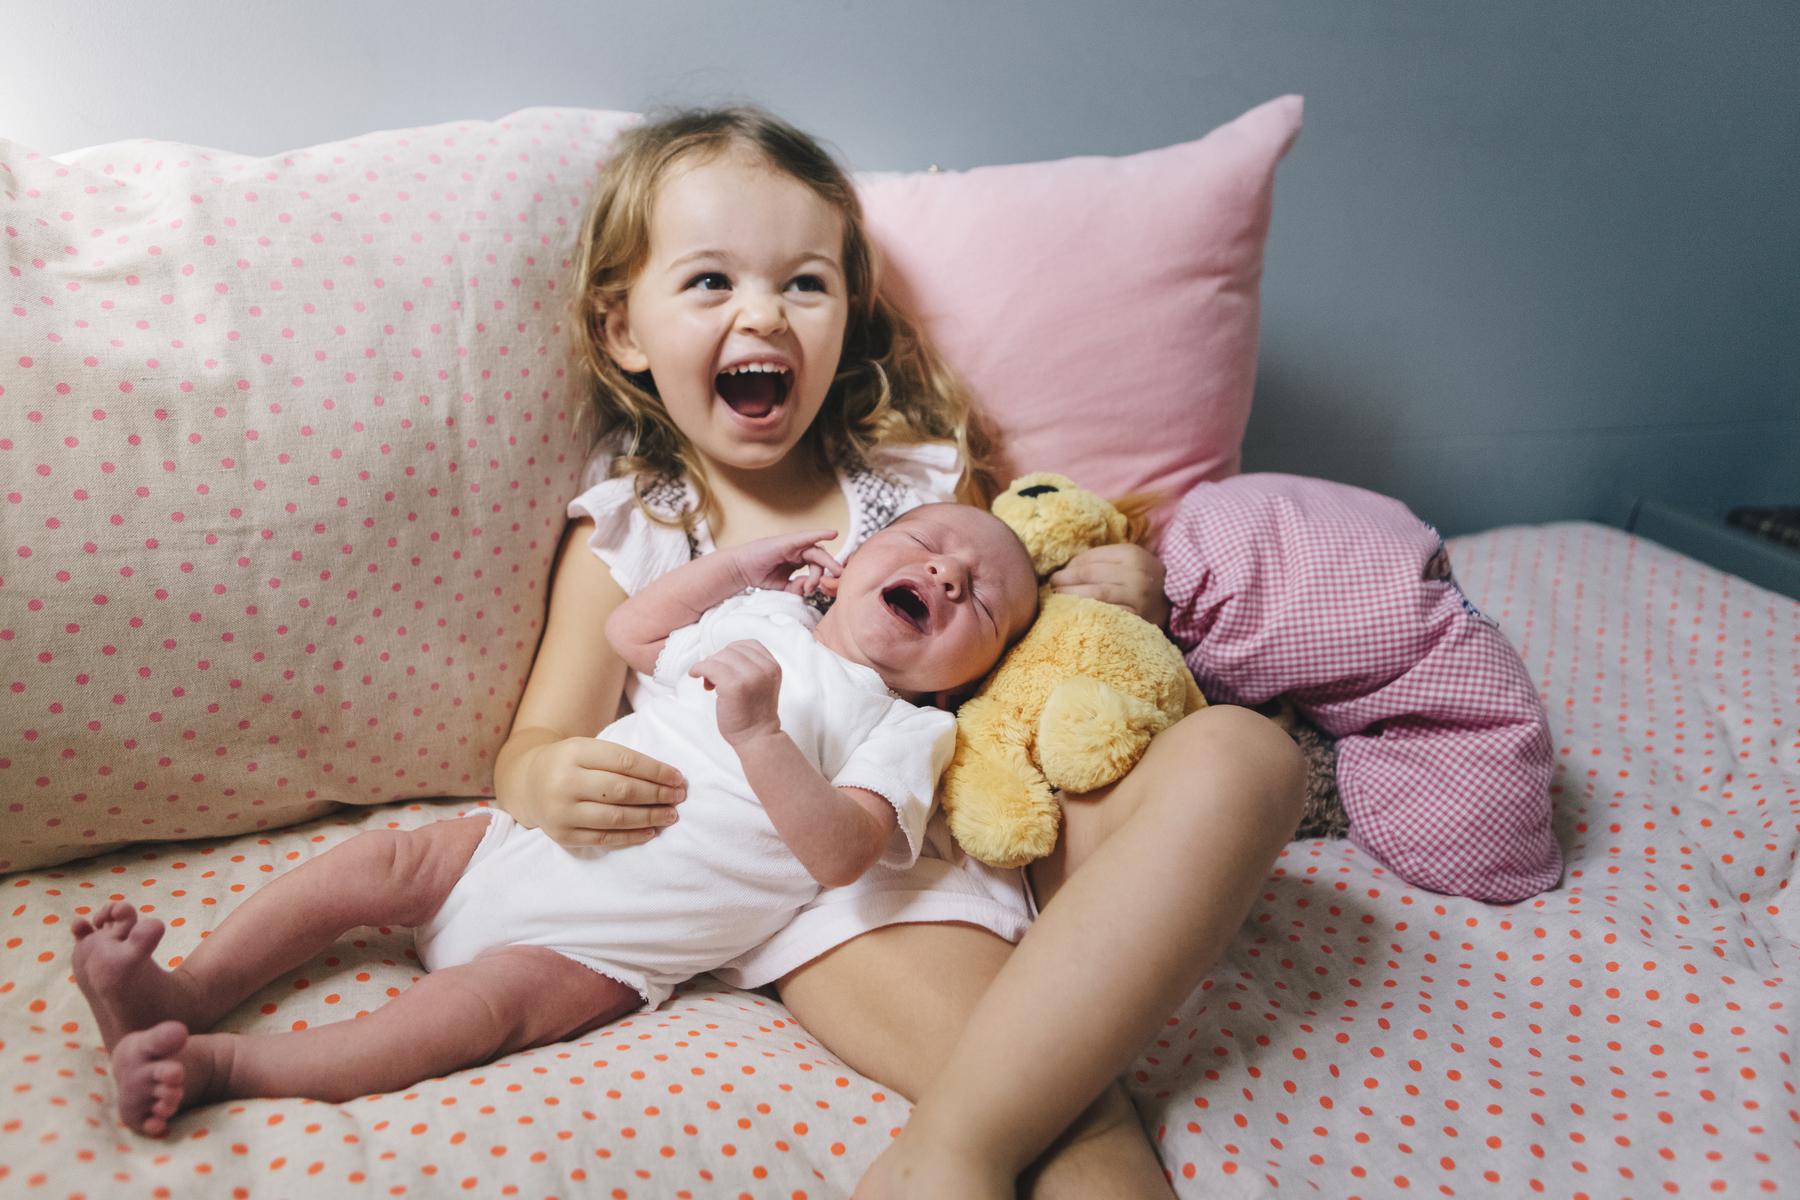 Girl with baby sister photo - © Lucy Leonardi